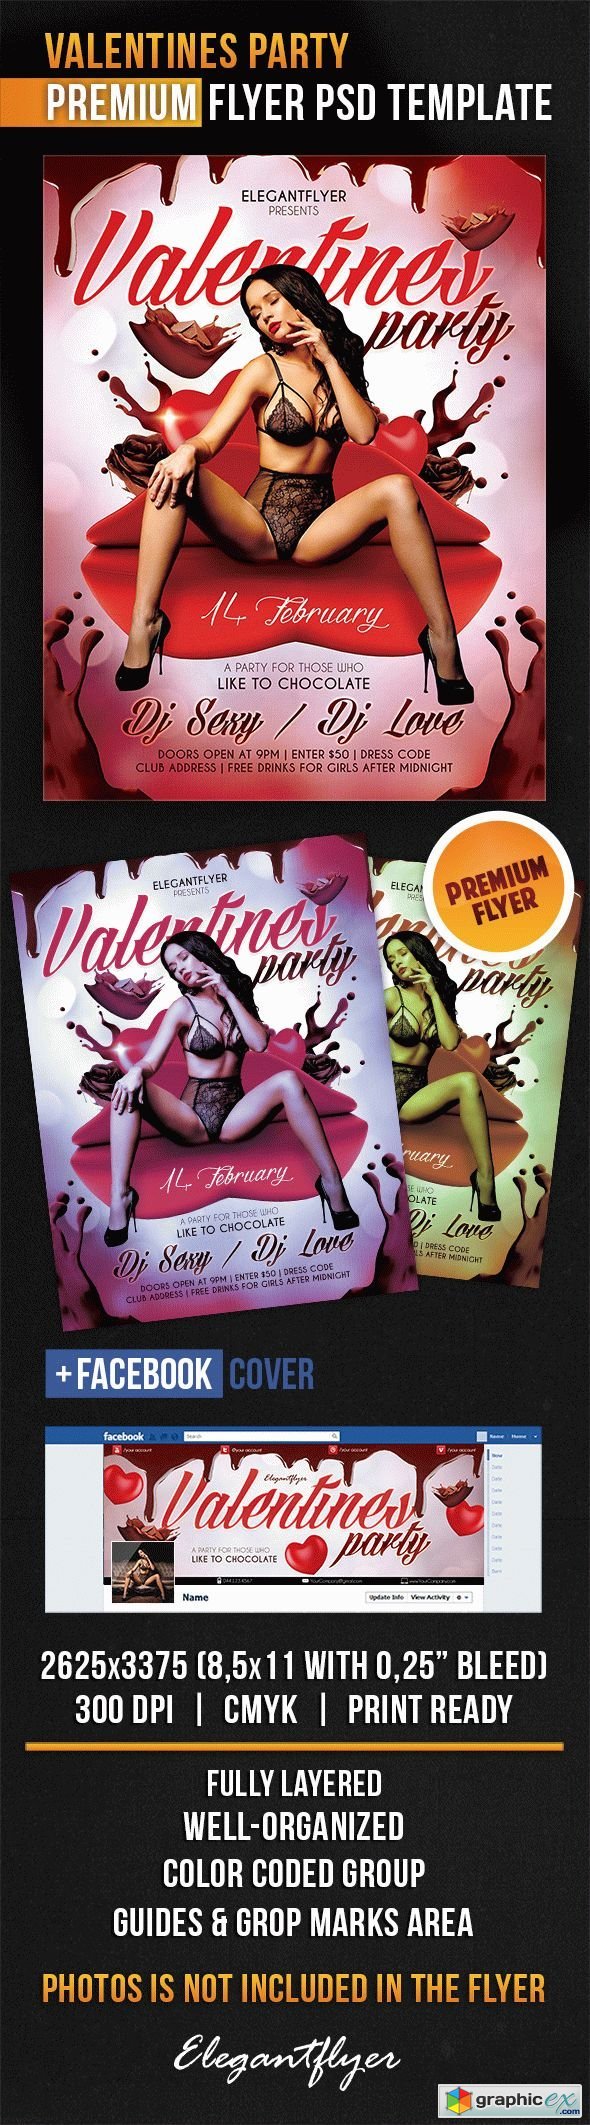 ElegantFlyer - Valentines Party Flyer PSD Template + Facebook Cover